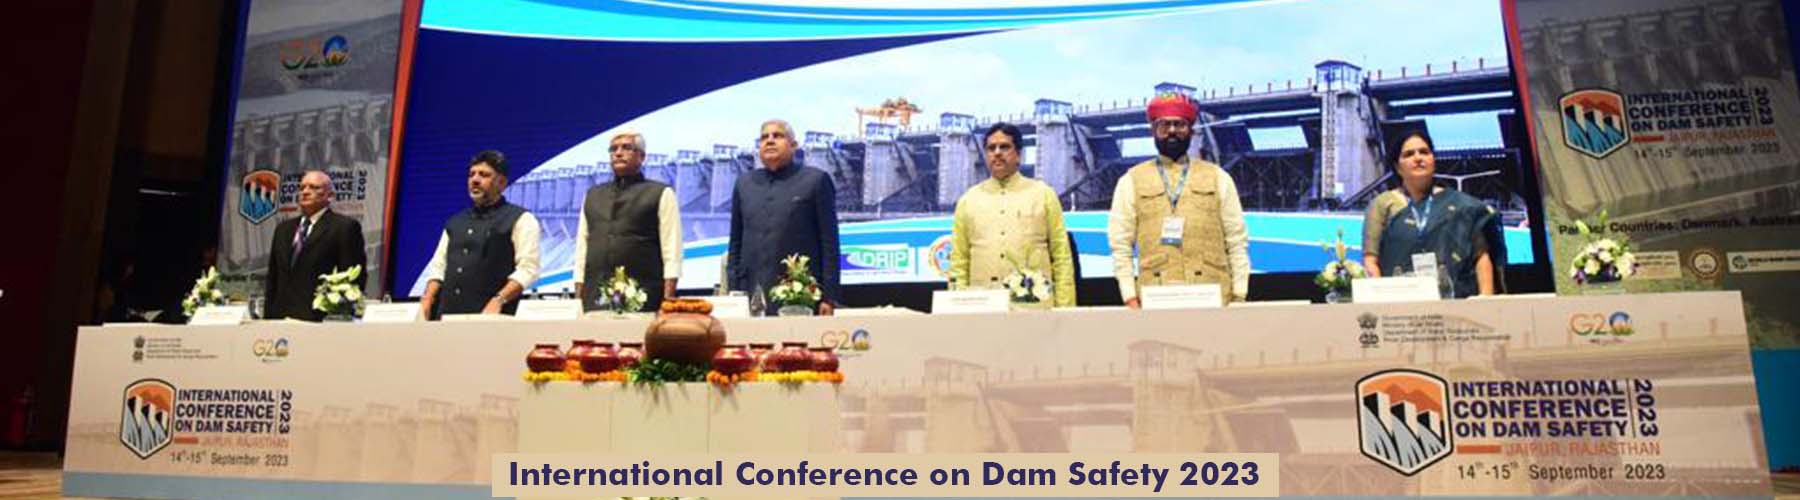 International Conference on Dam Safety